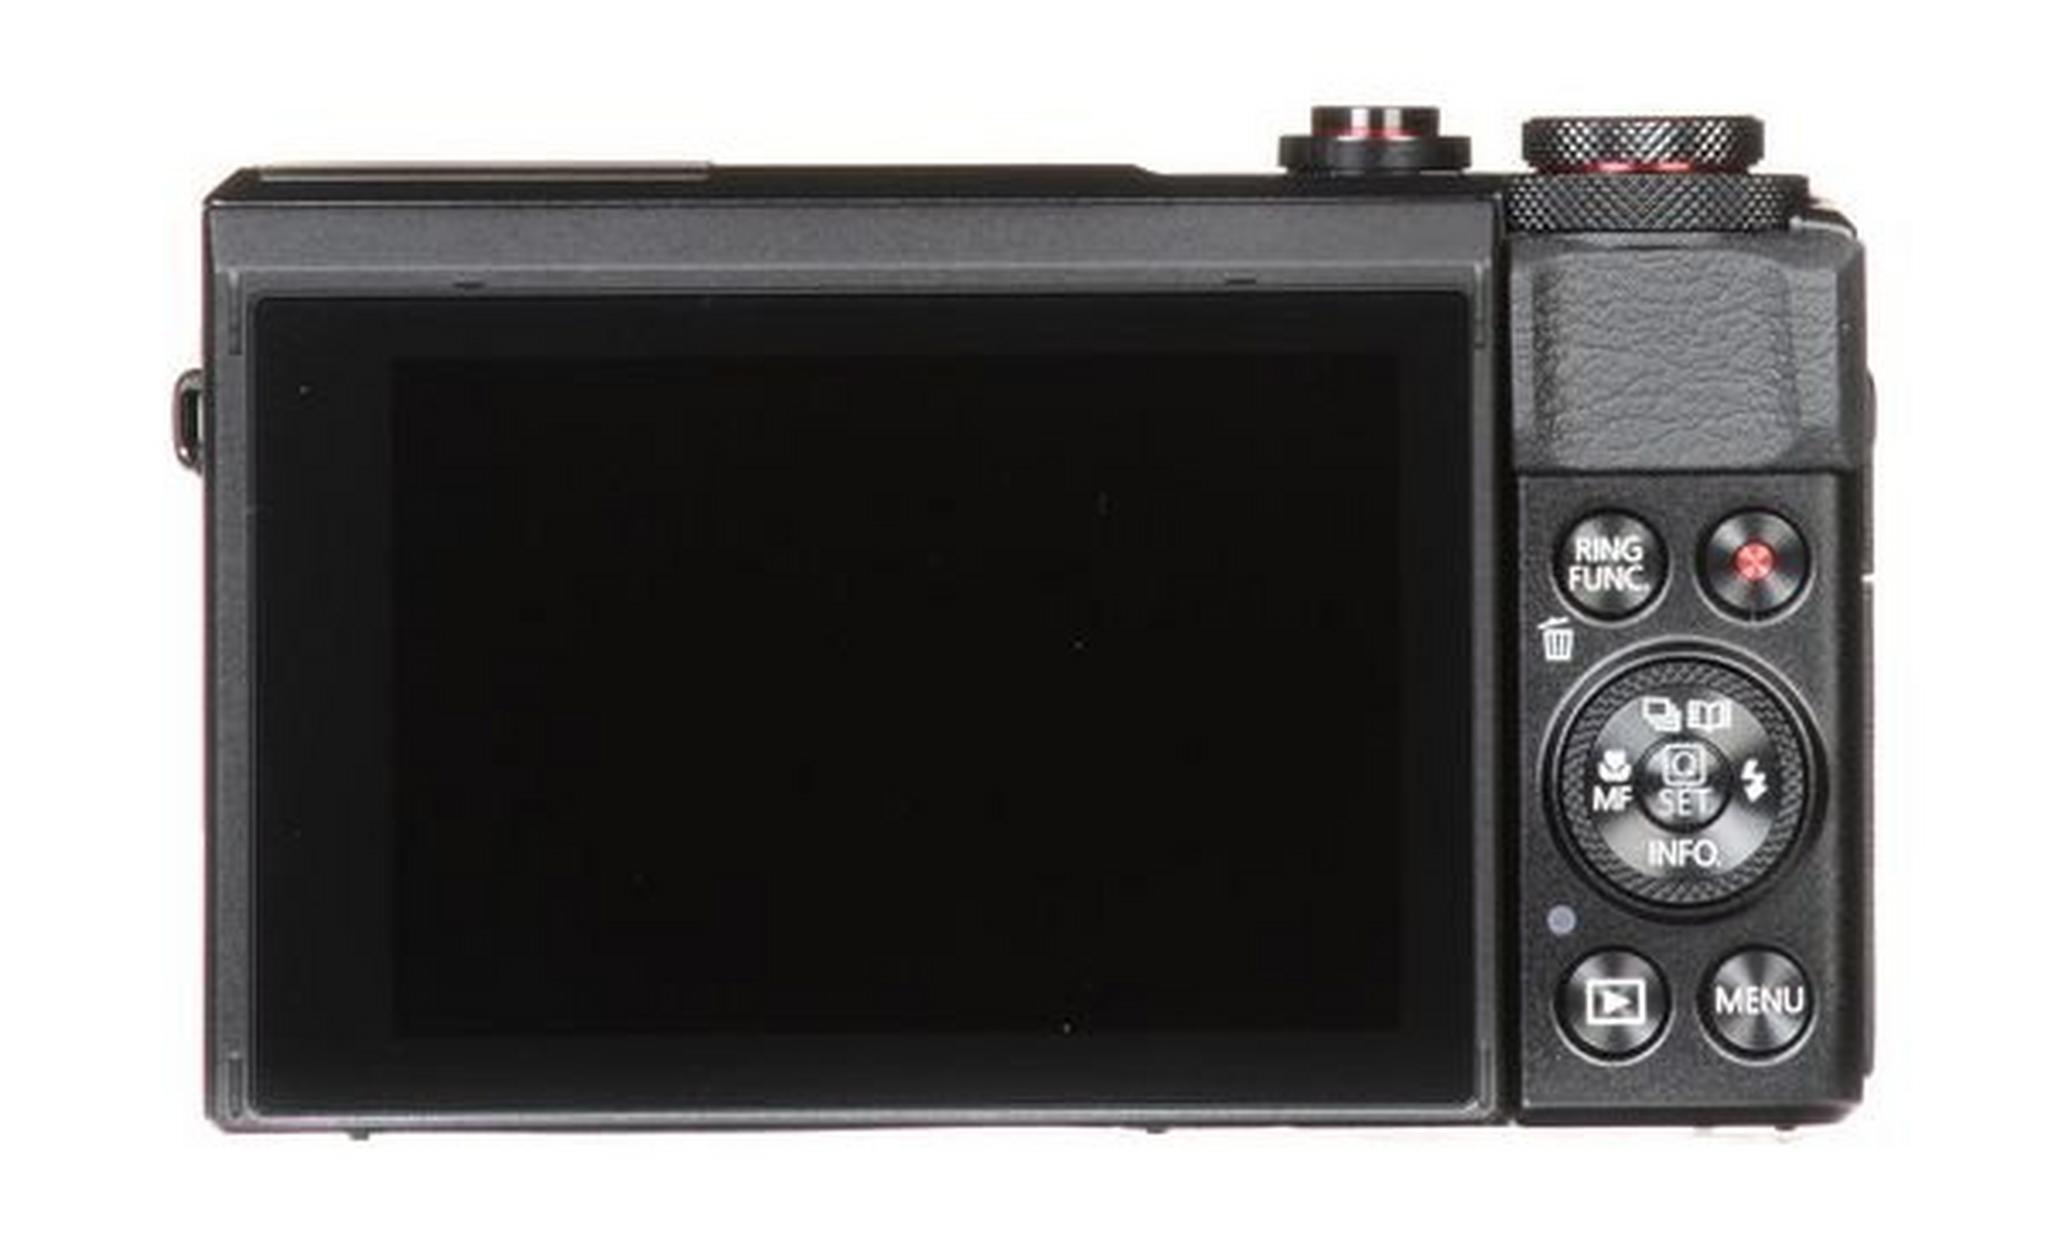 Canon PowerShot G7 X Mark II 20.1 MP 3.0-inch Touchscreen Display Digital Camera